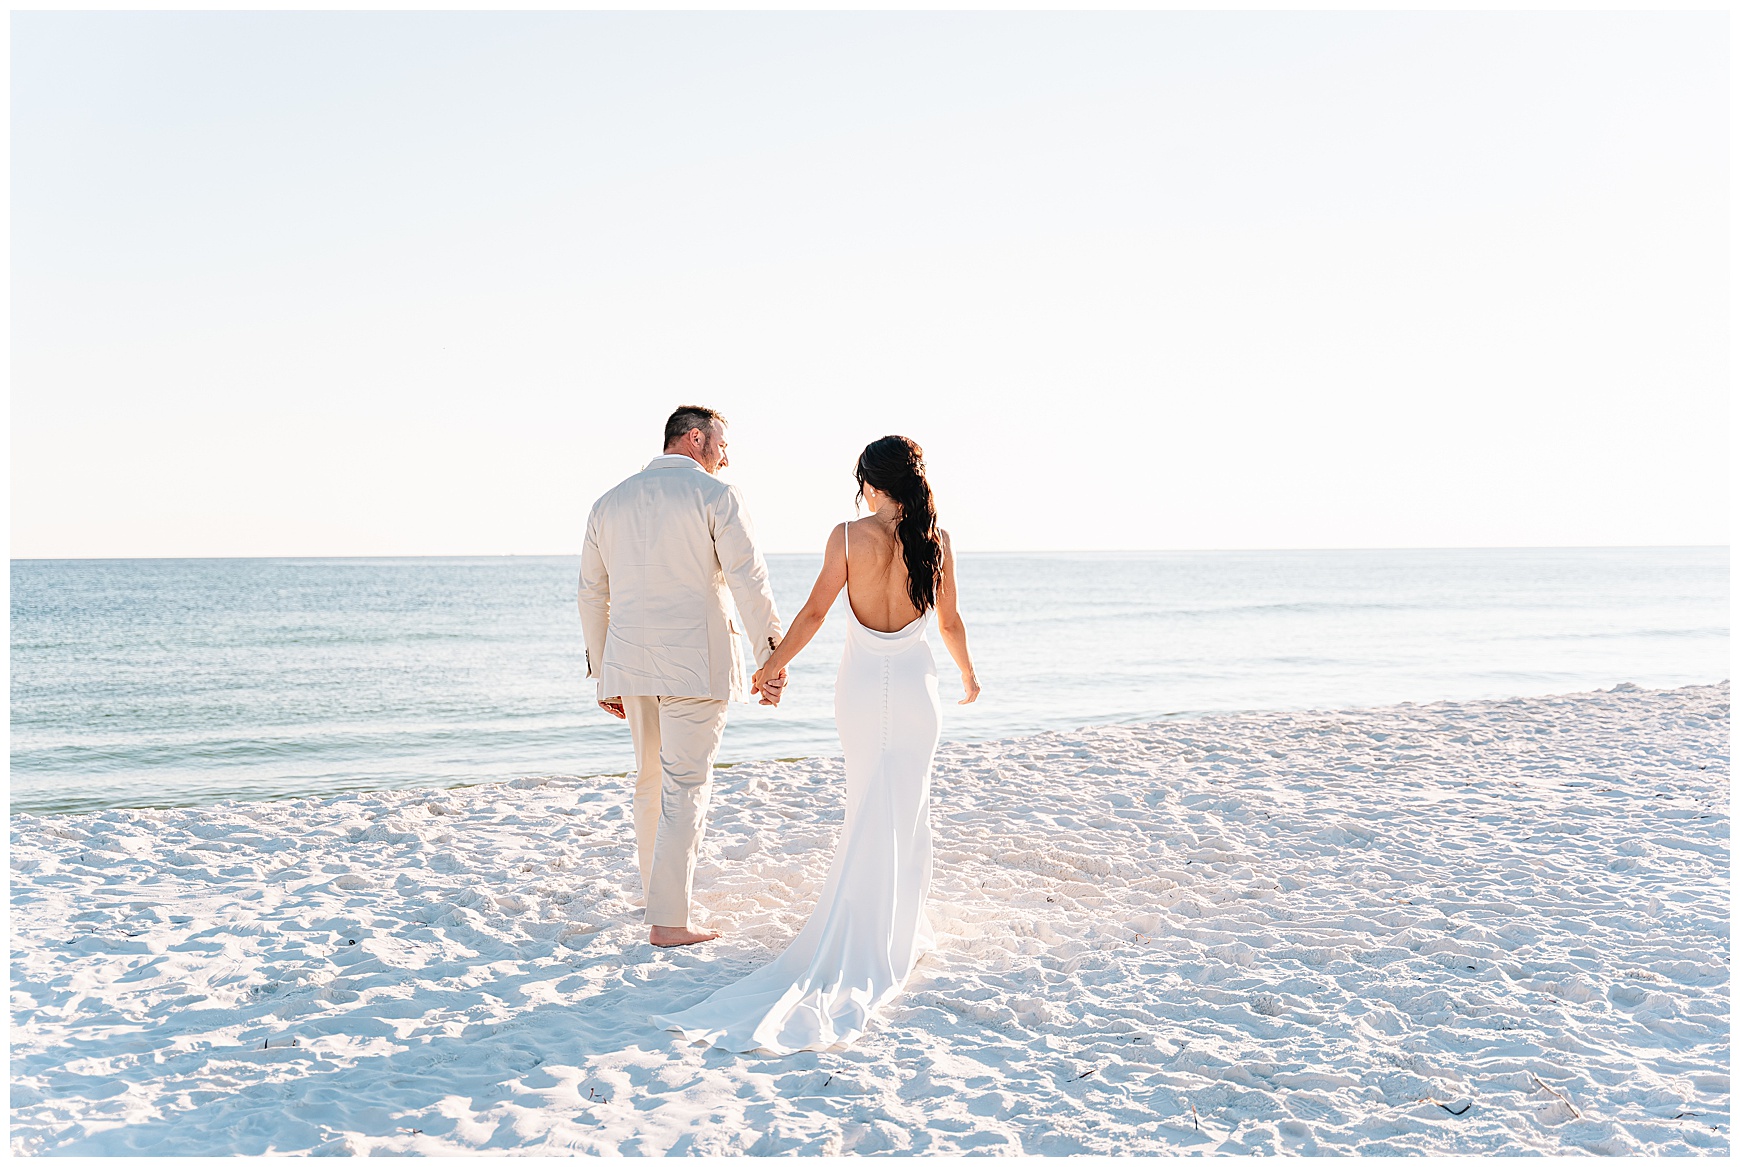 Bride and Groom walking on the beach in destin, fl